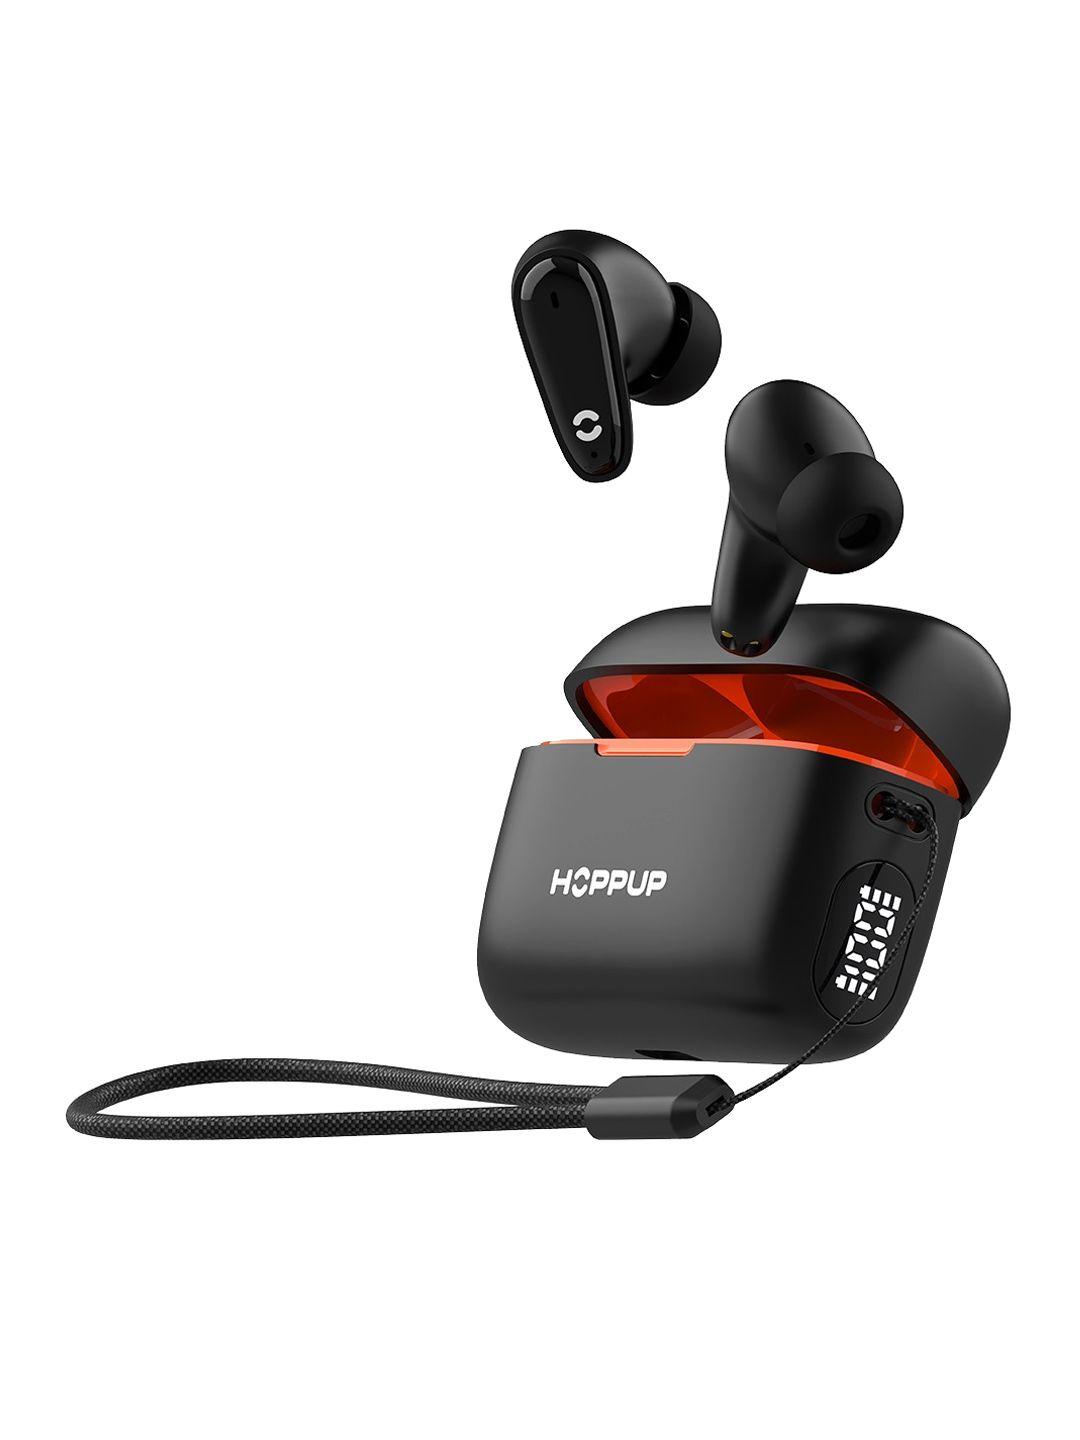 hoppup airdoze d505 with 10mm drivers, digital display & 50 hours playtime headphones